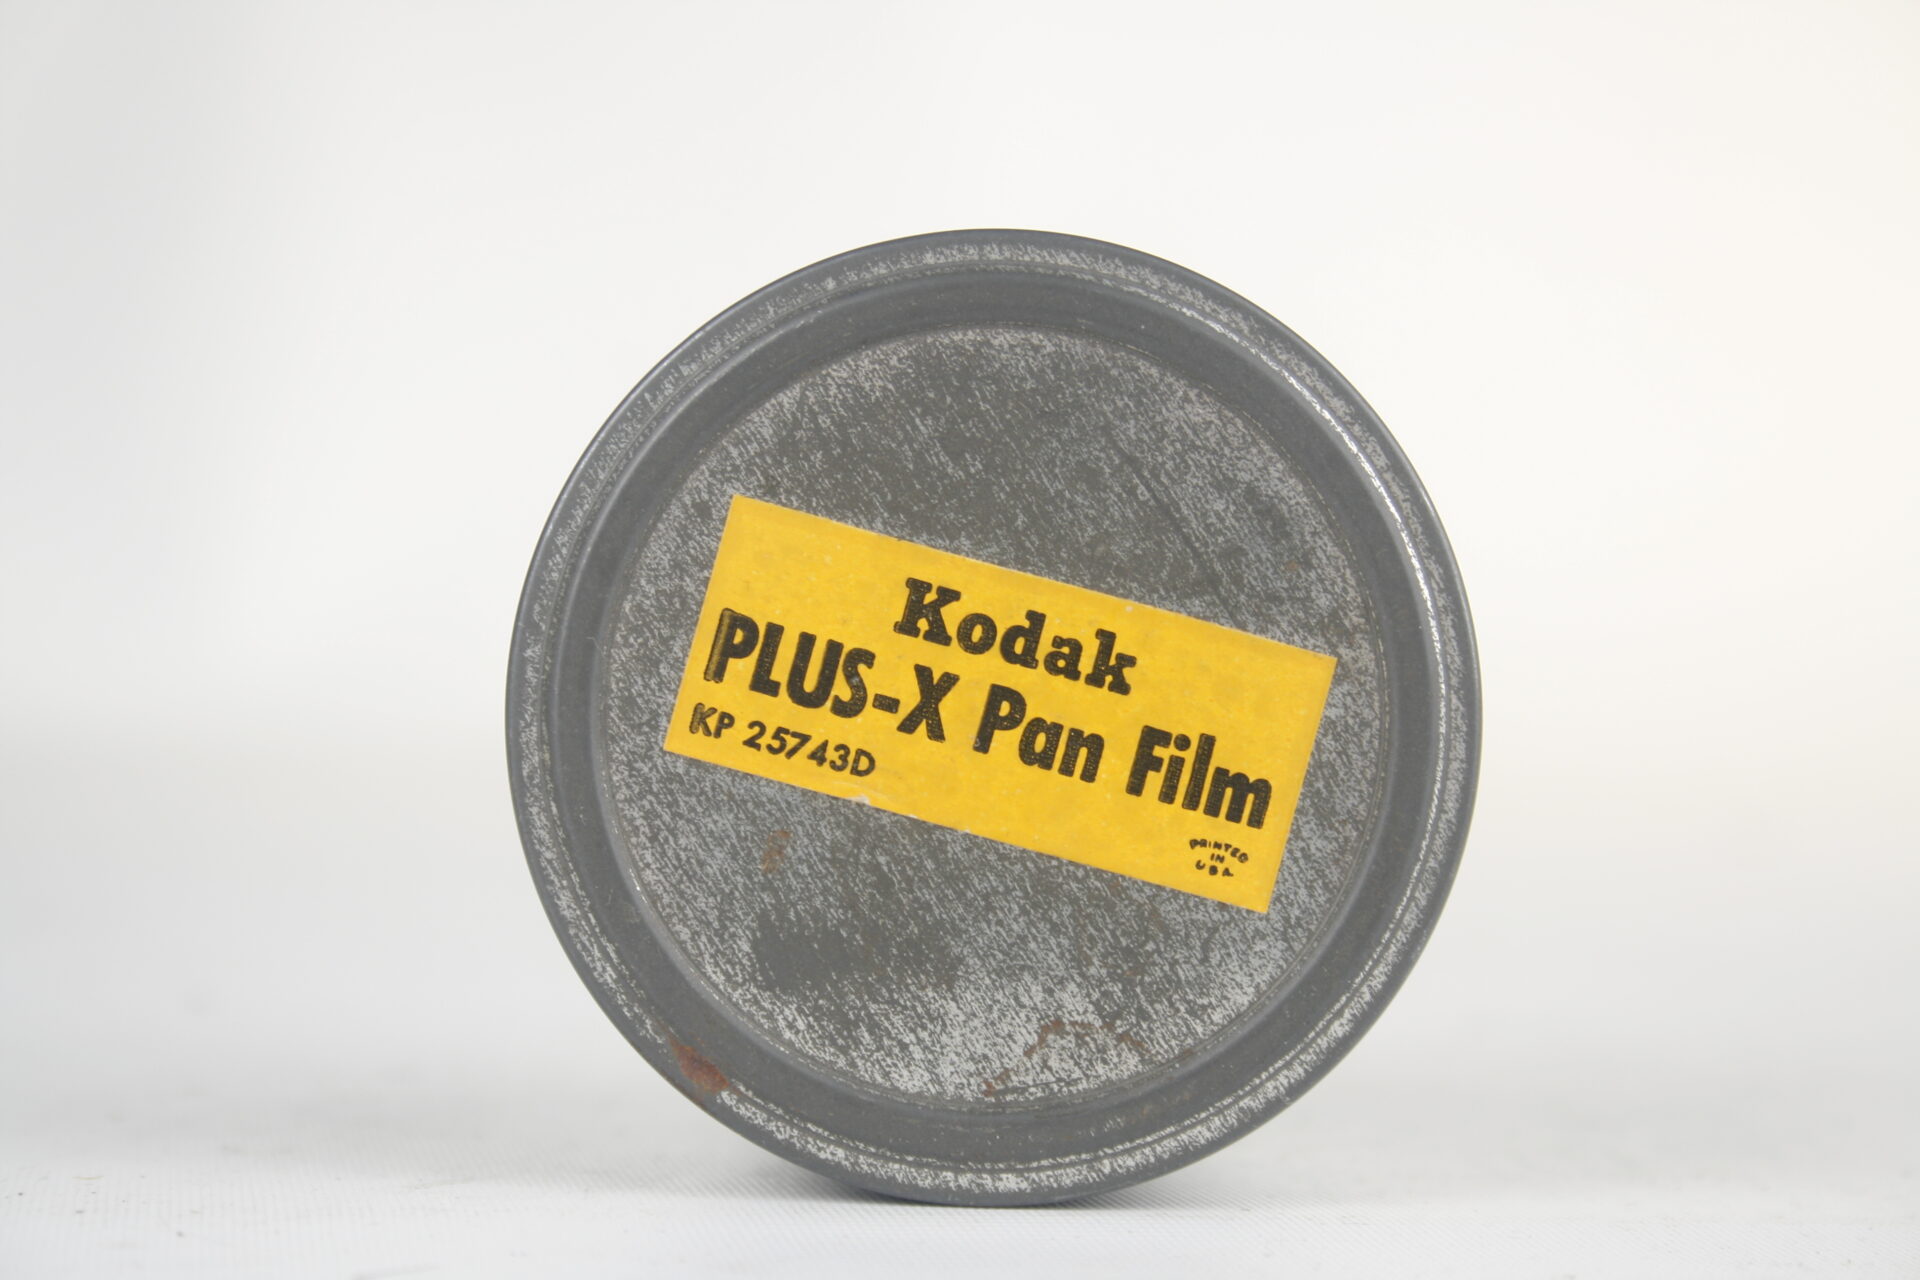 Kodak Plus-X Pan Film